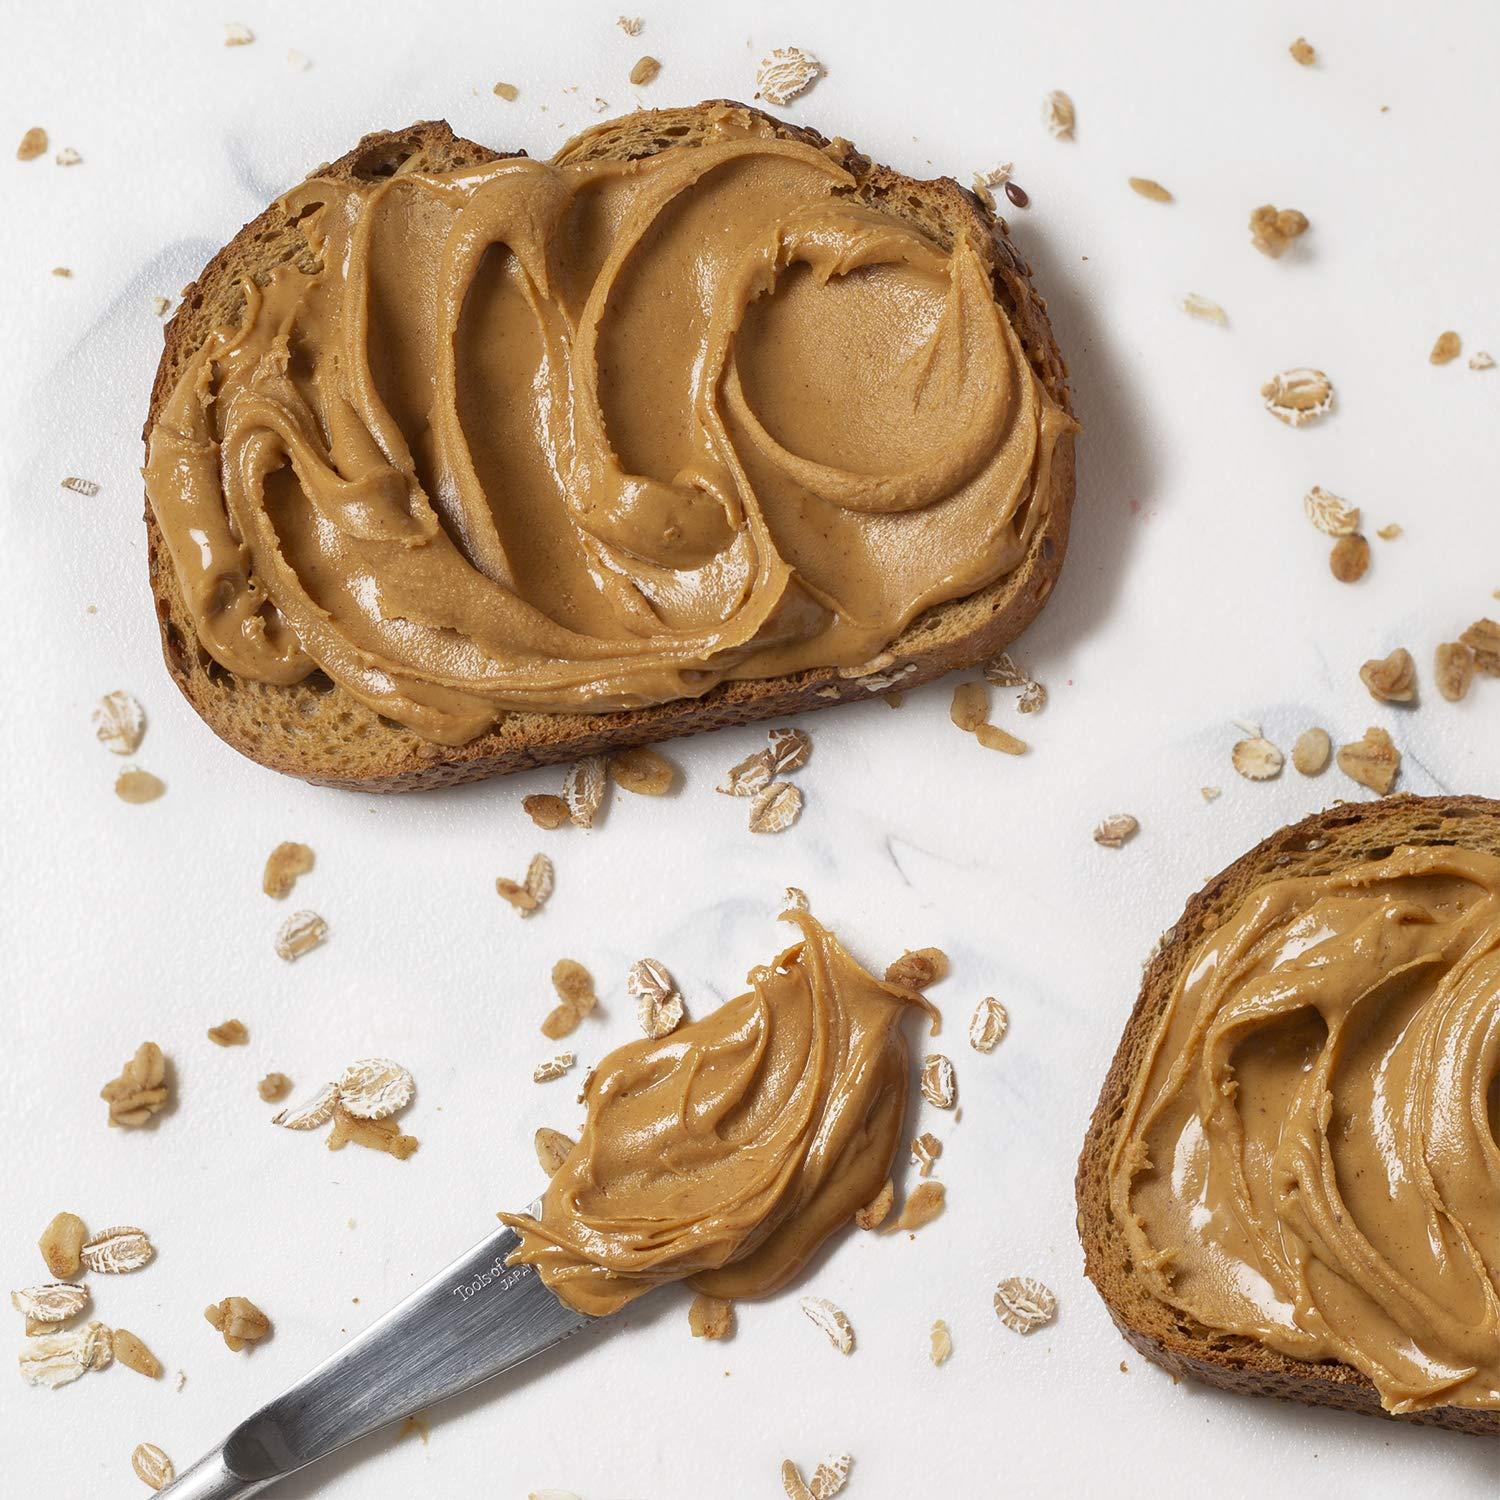 Peanut Butter & Co Dark Chocolate Dreams Peanut Butter - 16oz : Target